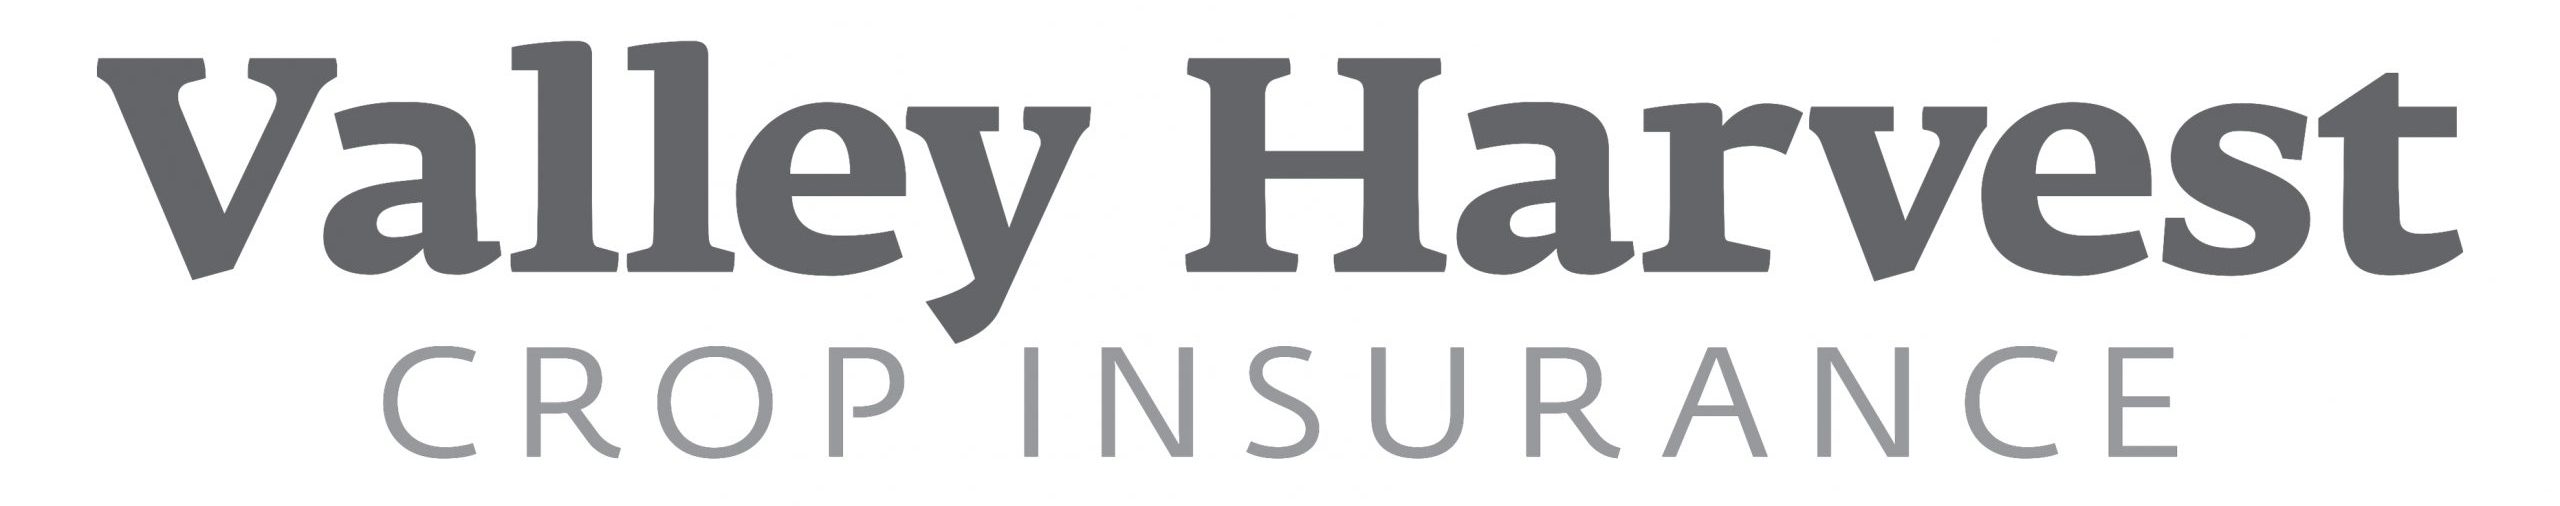 Valley Harvest Crop Insurance